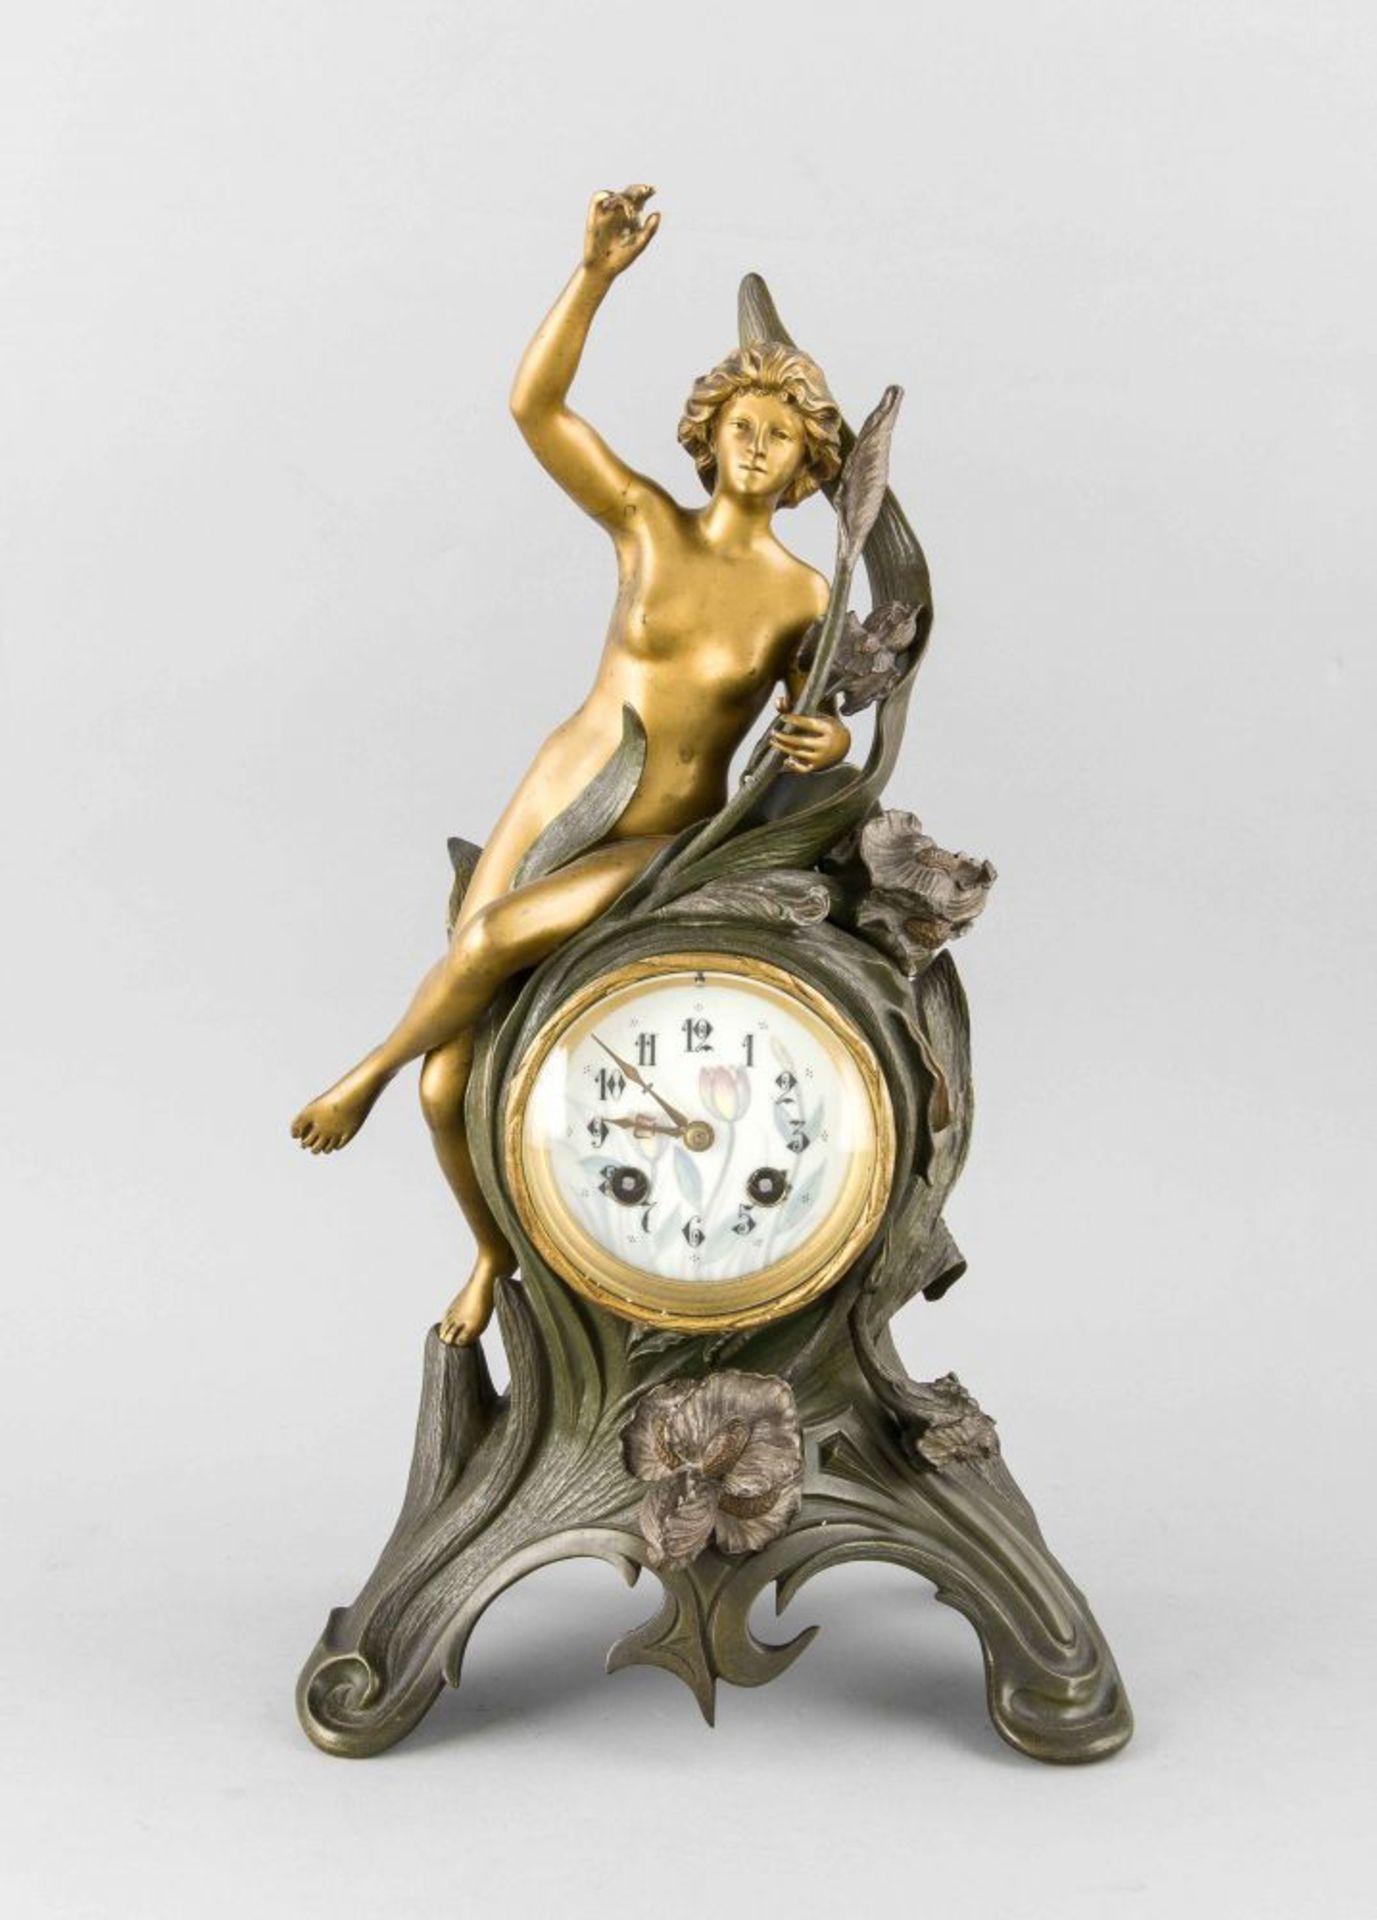 Dekorative Jugendstil-Pendule, um 1900, Bronze patiniert/vergoldet, floral gestaltetes Gehäuse,